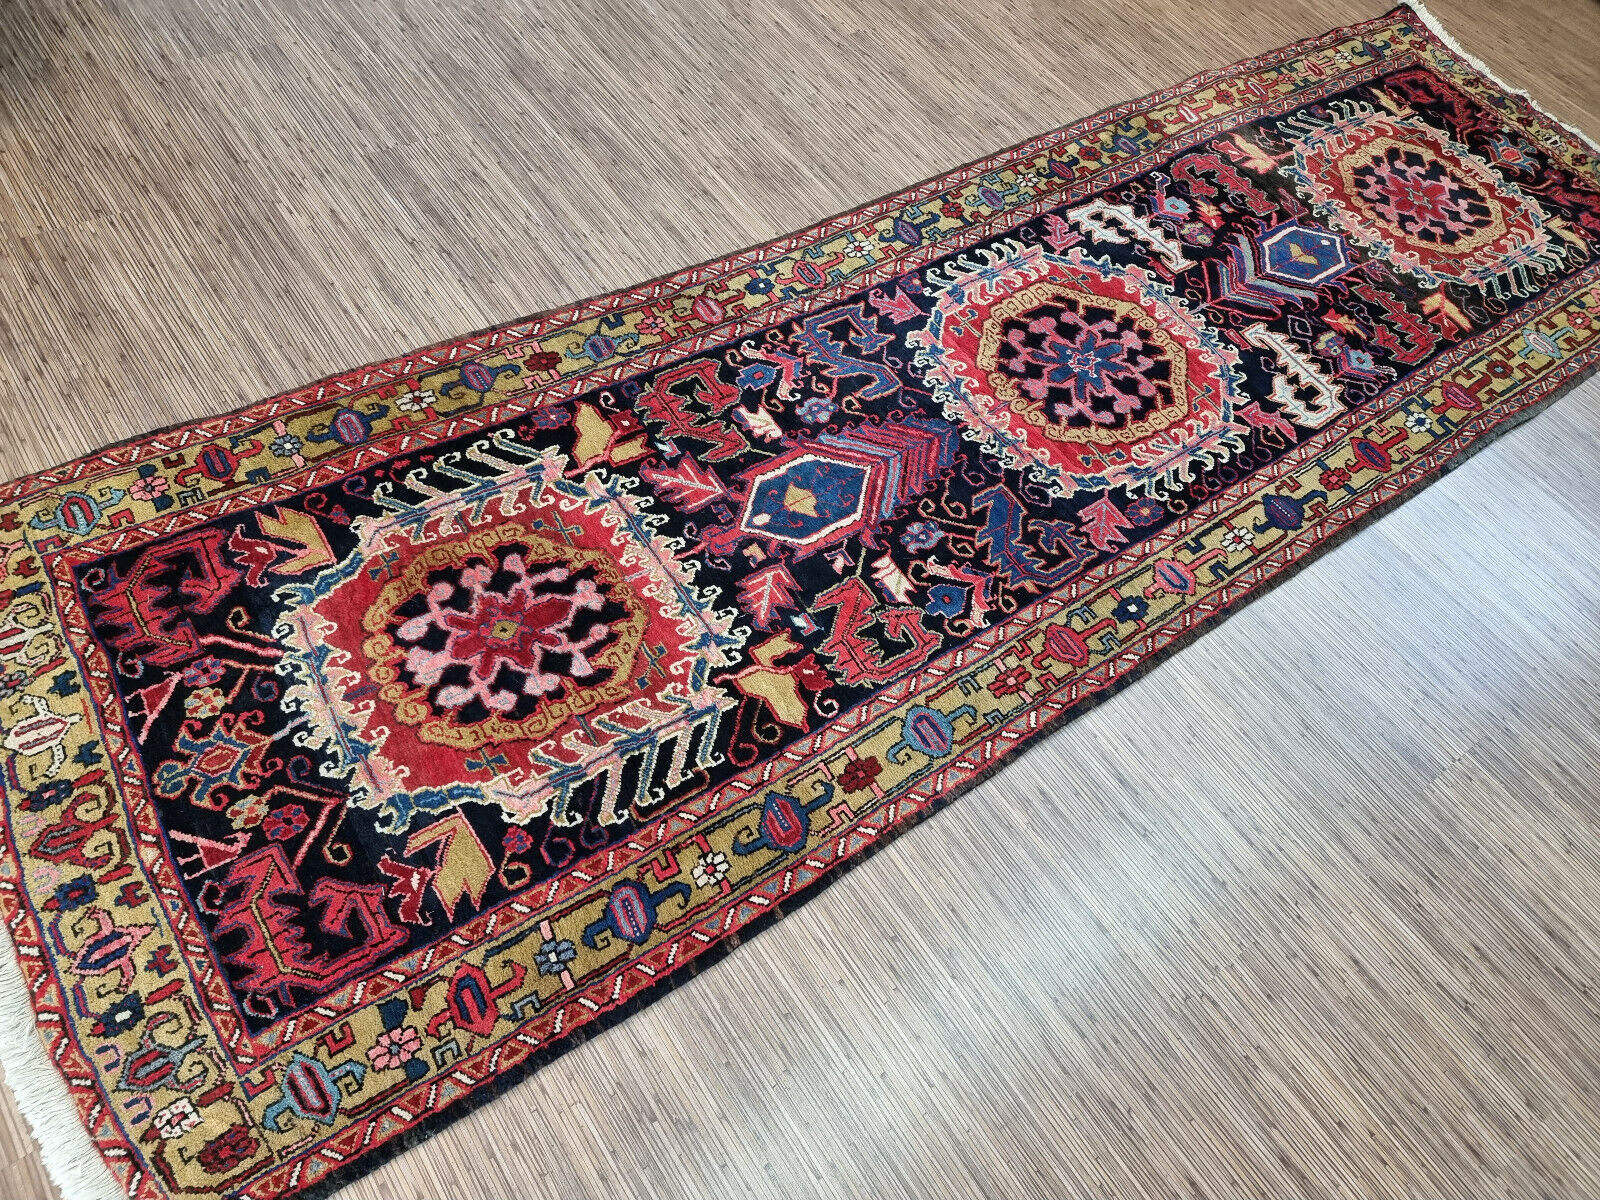 Close-up of craftsmanship on Handmade Antique Persian Heriz Runner Rug - Detailed view showcasing the craftsmanship involved in creating the rug's intricate pattern.